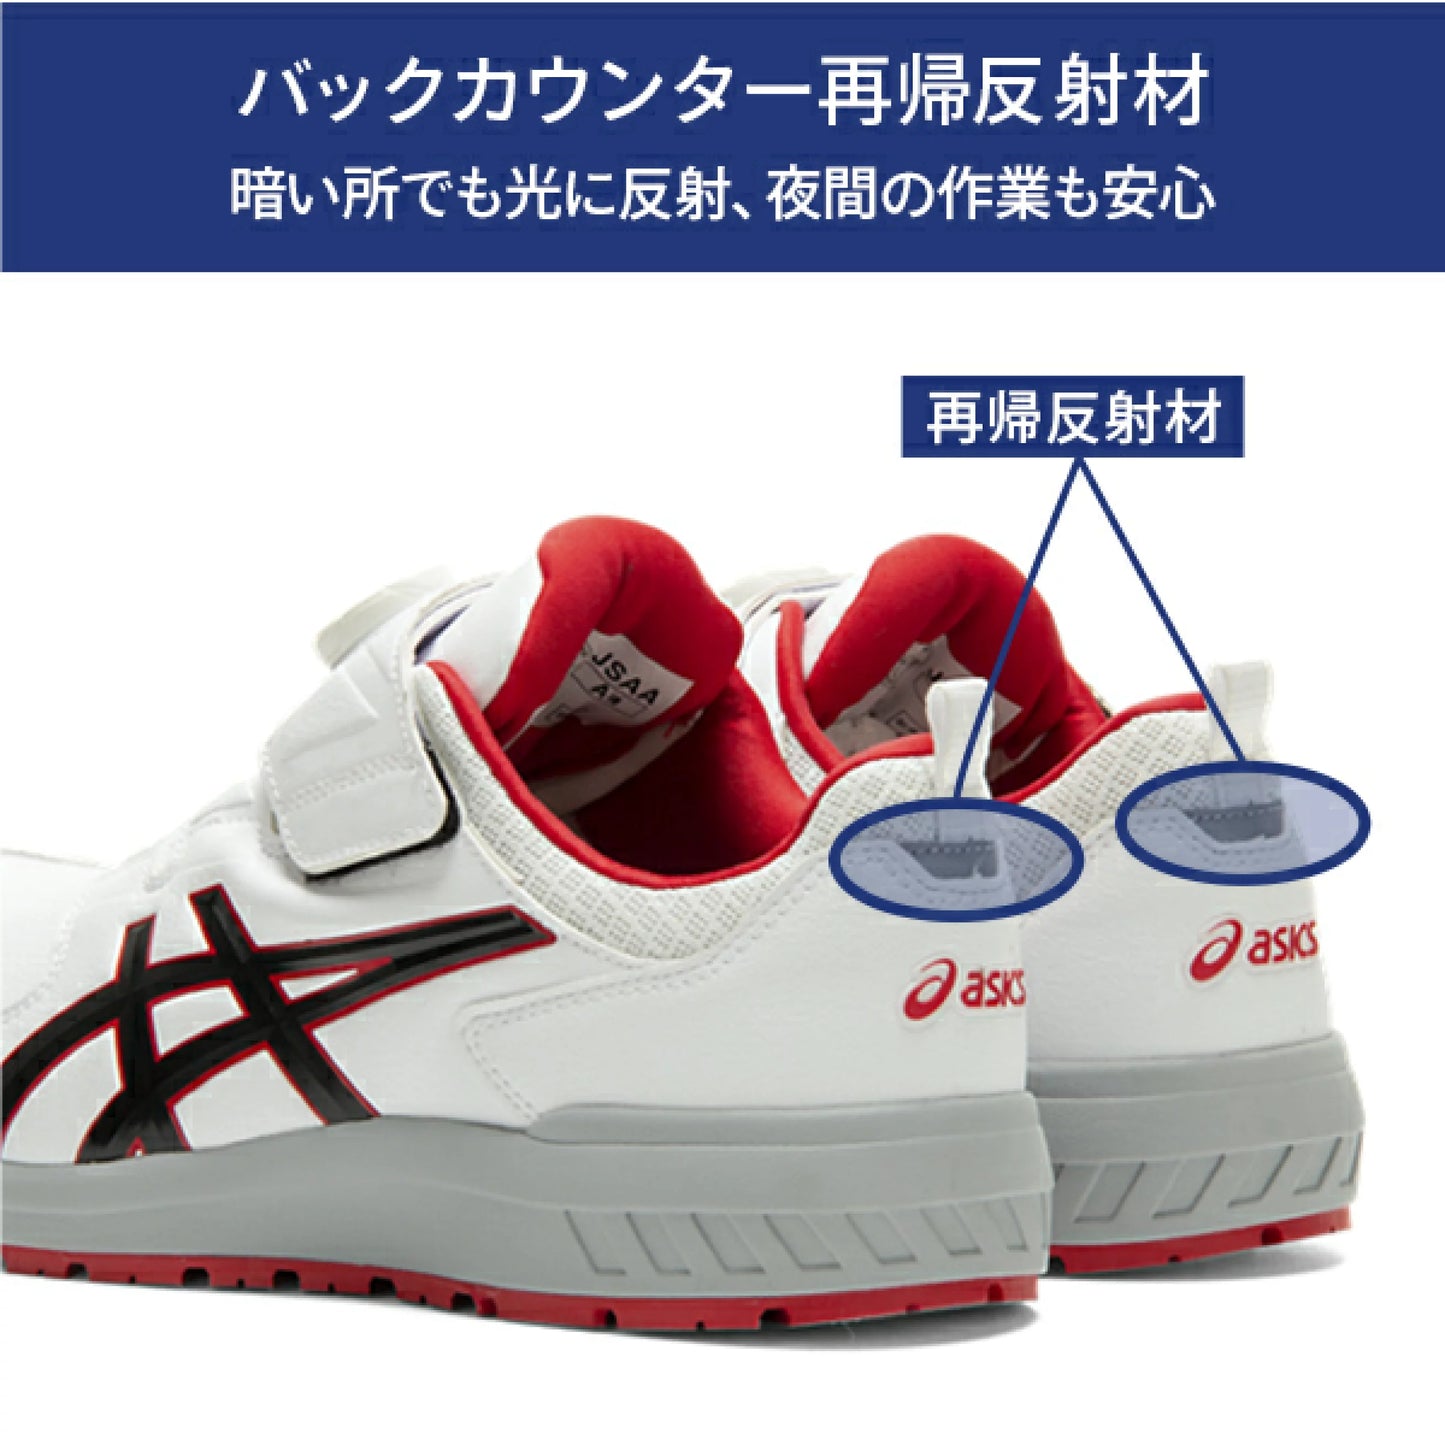 🎌Japan🎌【In stock▪️Ready to ship】ASICS white BOA safety shoes 27cm US9.5 EU43.5 JSAA Class A anti-slip and anti-fall CP307 JSAA JIS